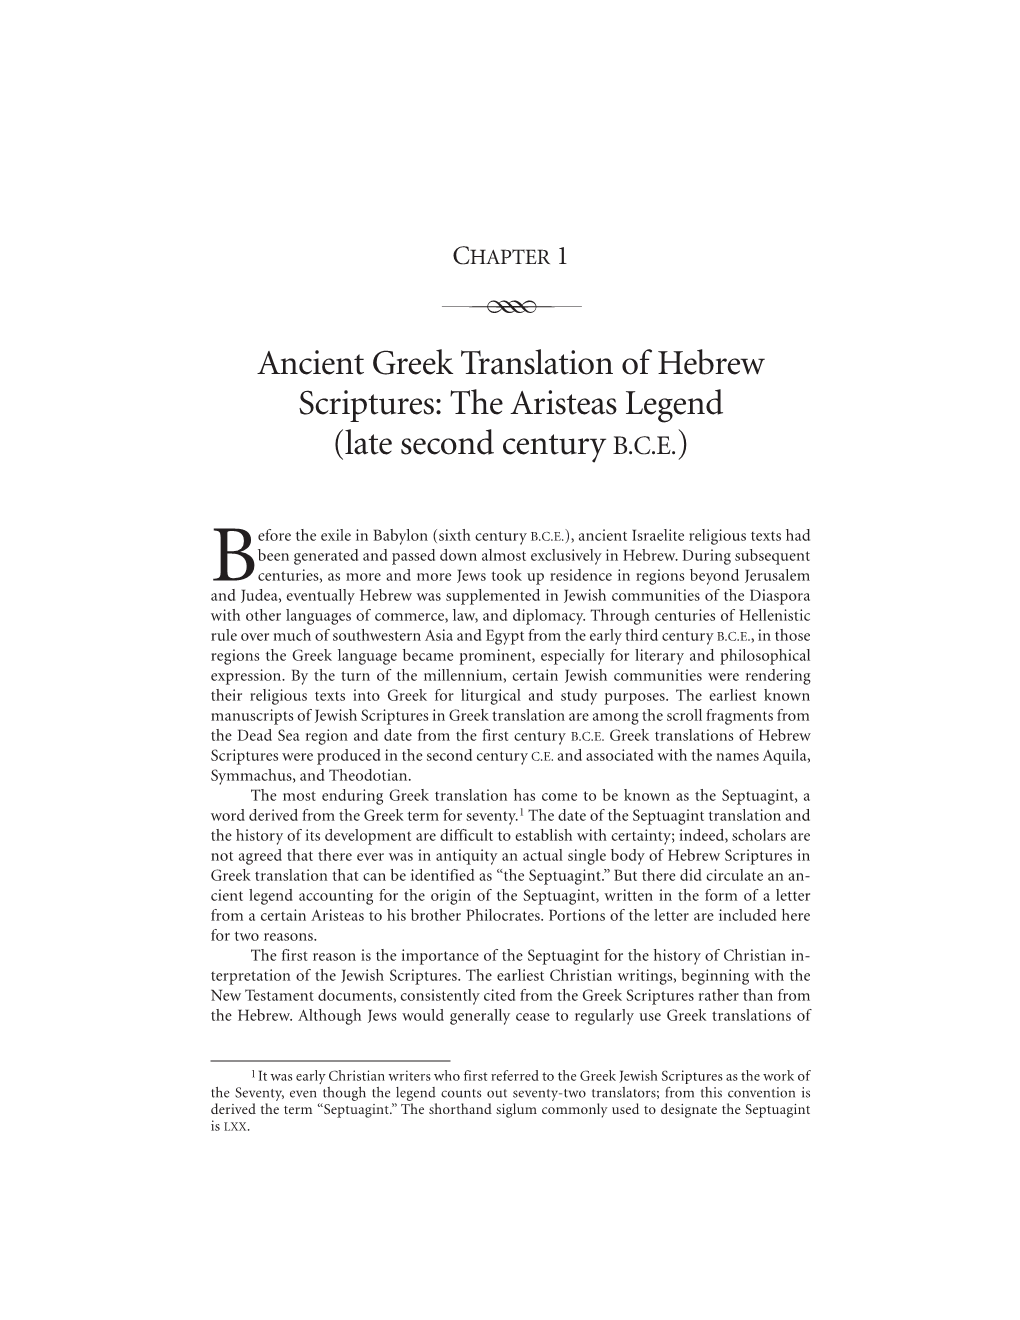 Ancient Greek Translation of Hebrew Scriptures: the Aristeas Legend (Late Second Century B.C.E.)